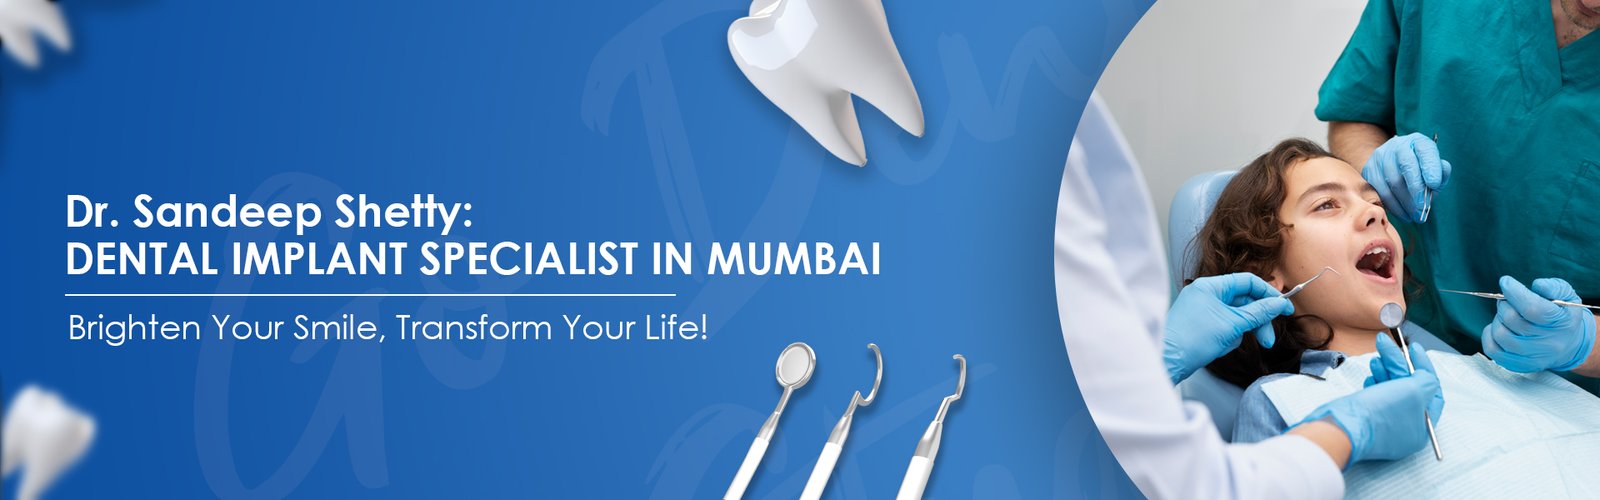 Dental Clinic in Mumbai